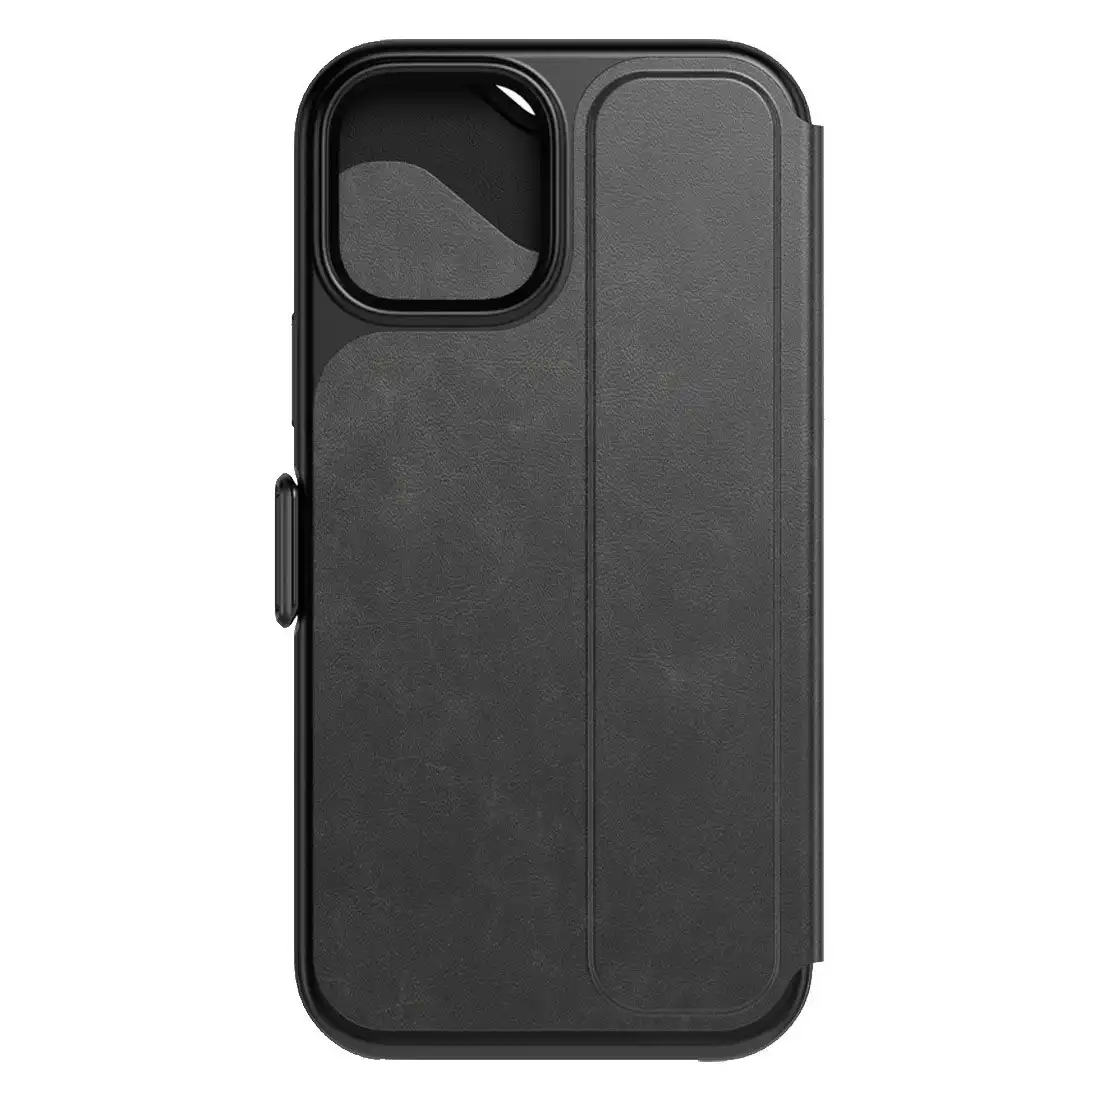 Tech21 Evo Wallet Case for iPhone 12 mini T21-8359 - Black